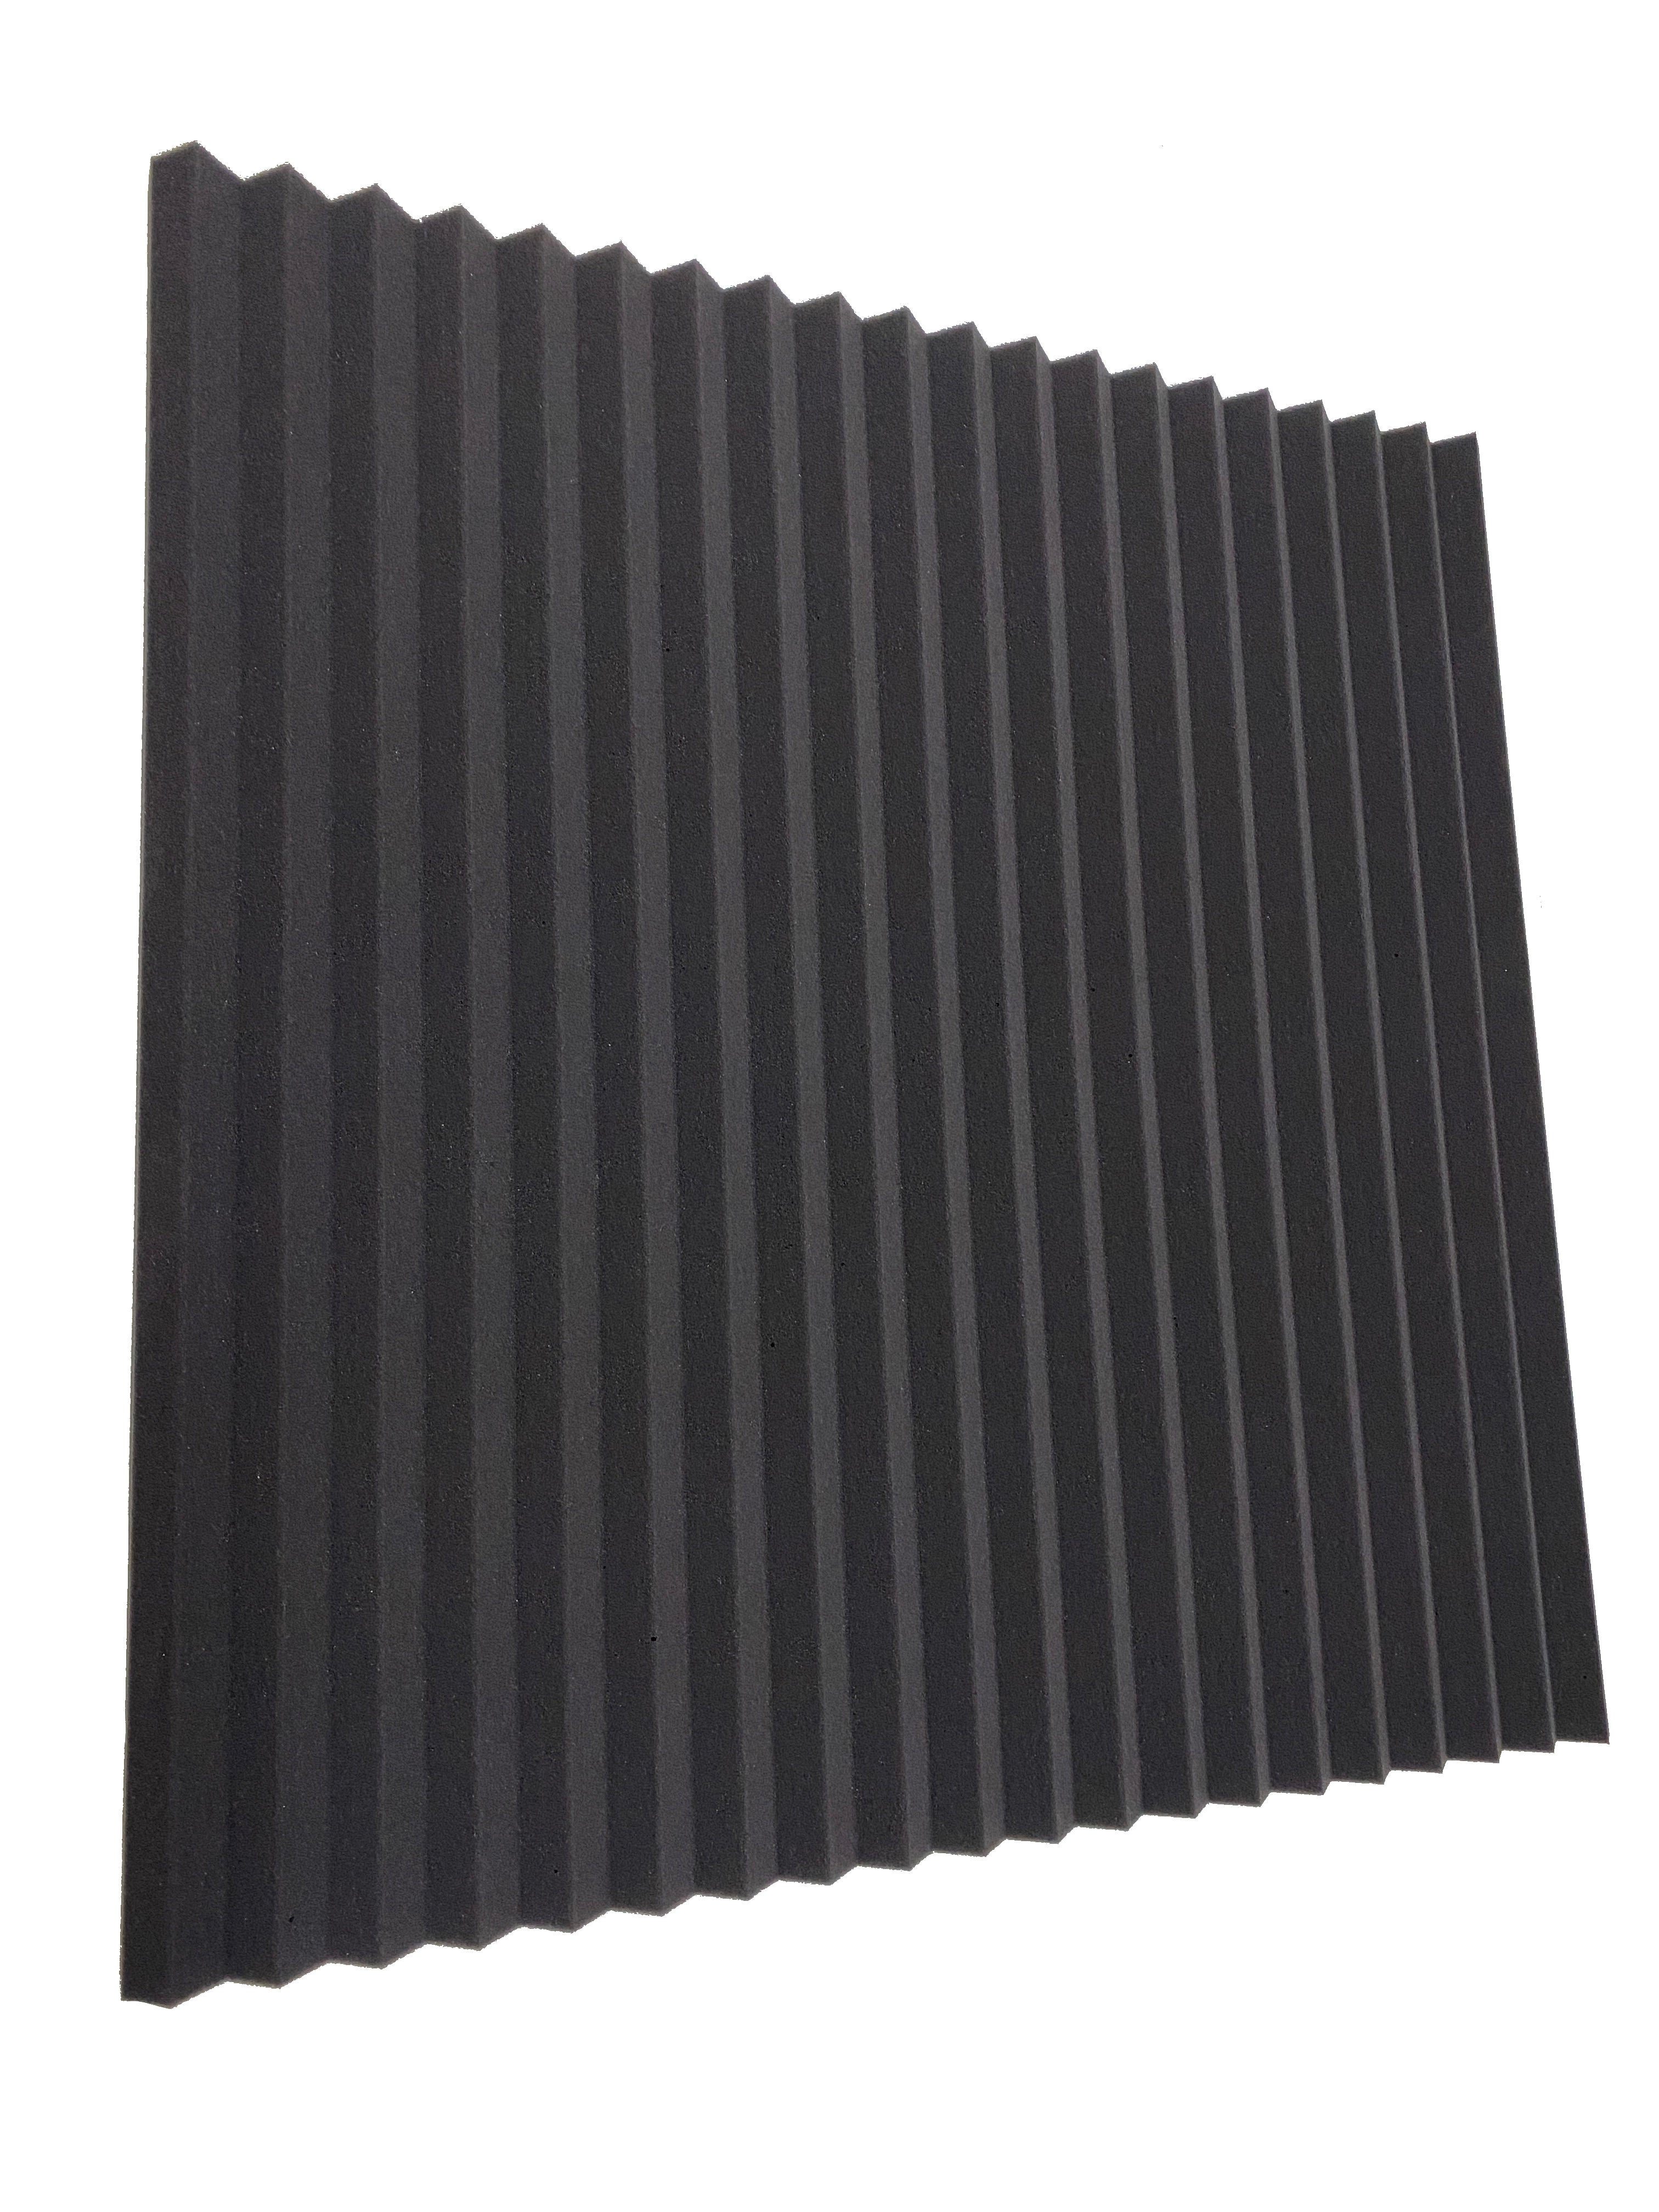 Wedge 30" Acoustic Studio Foam Tile Pack - 6 Tiles, 3.48sqm Coverage